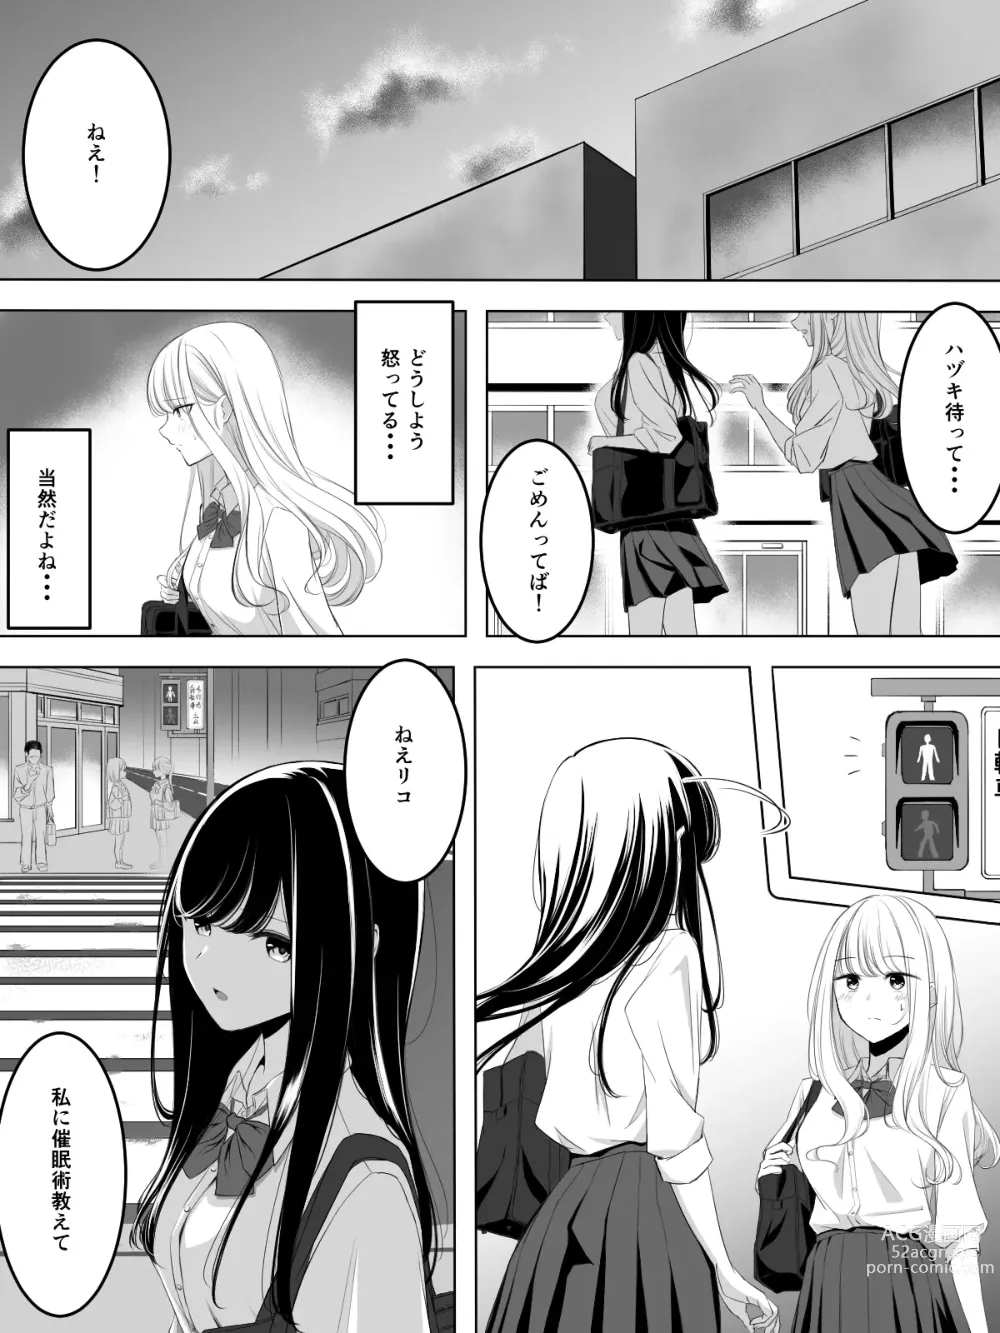 Page 19 of doujinshi Yuri comic Part 1,2 and 3.